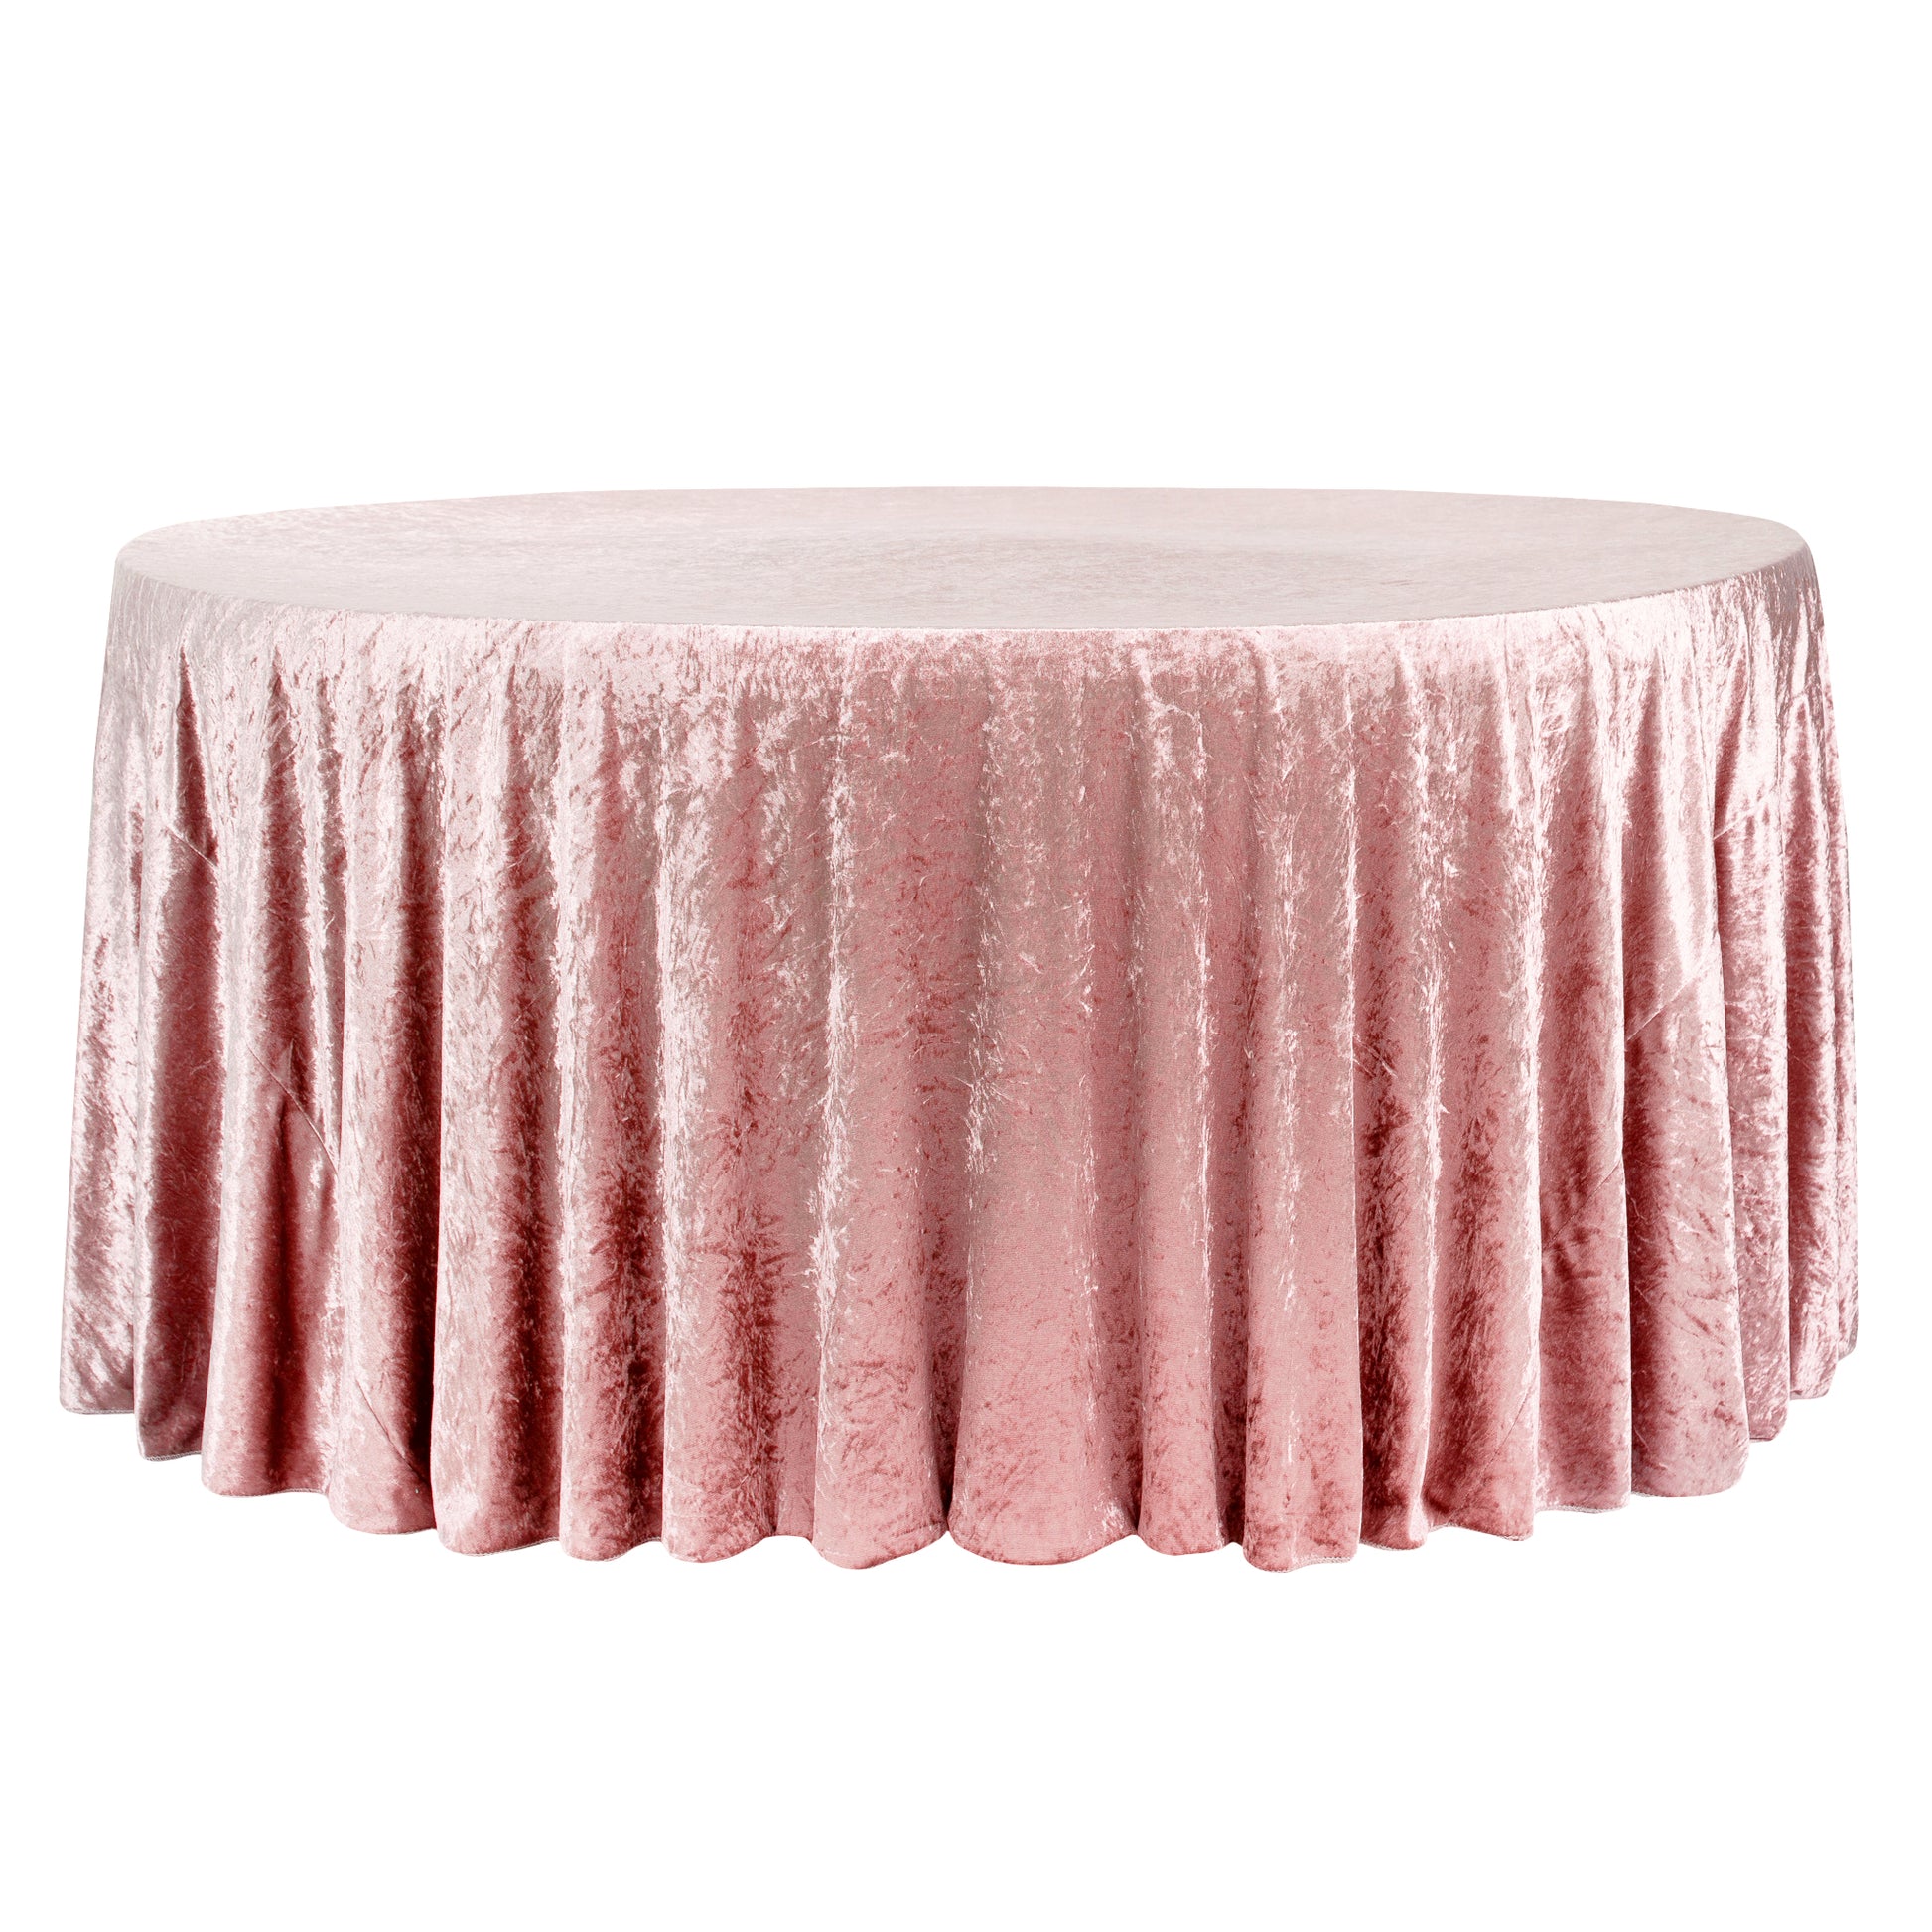 Velvet 132" Round Tablecloth - Dusty Rose/Mauve - CV Linens